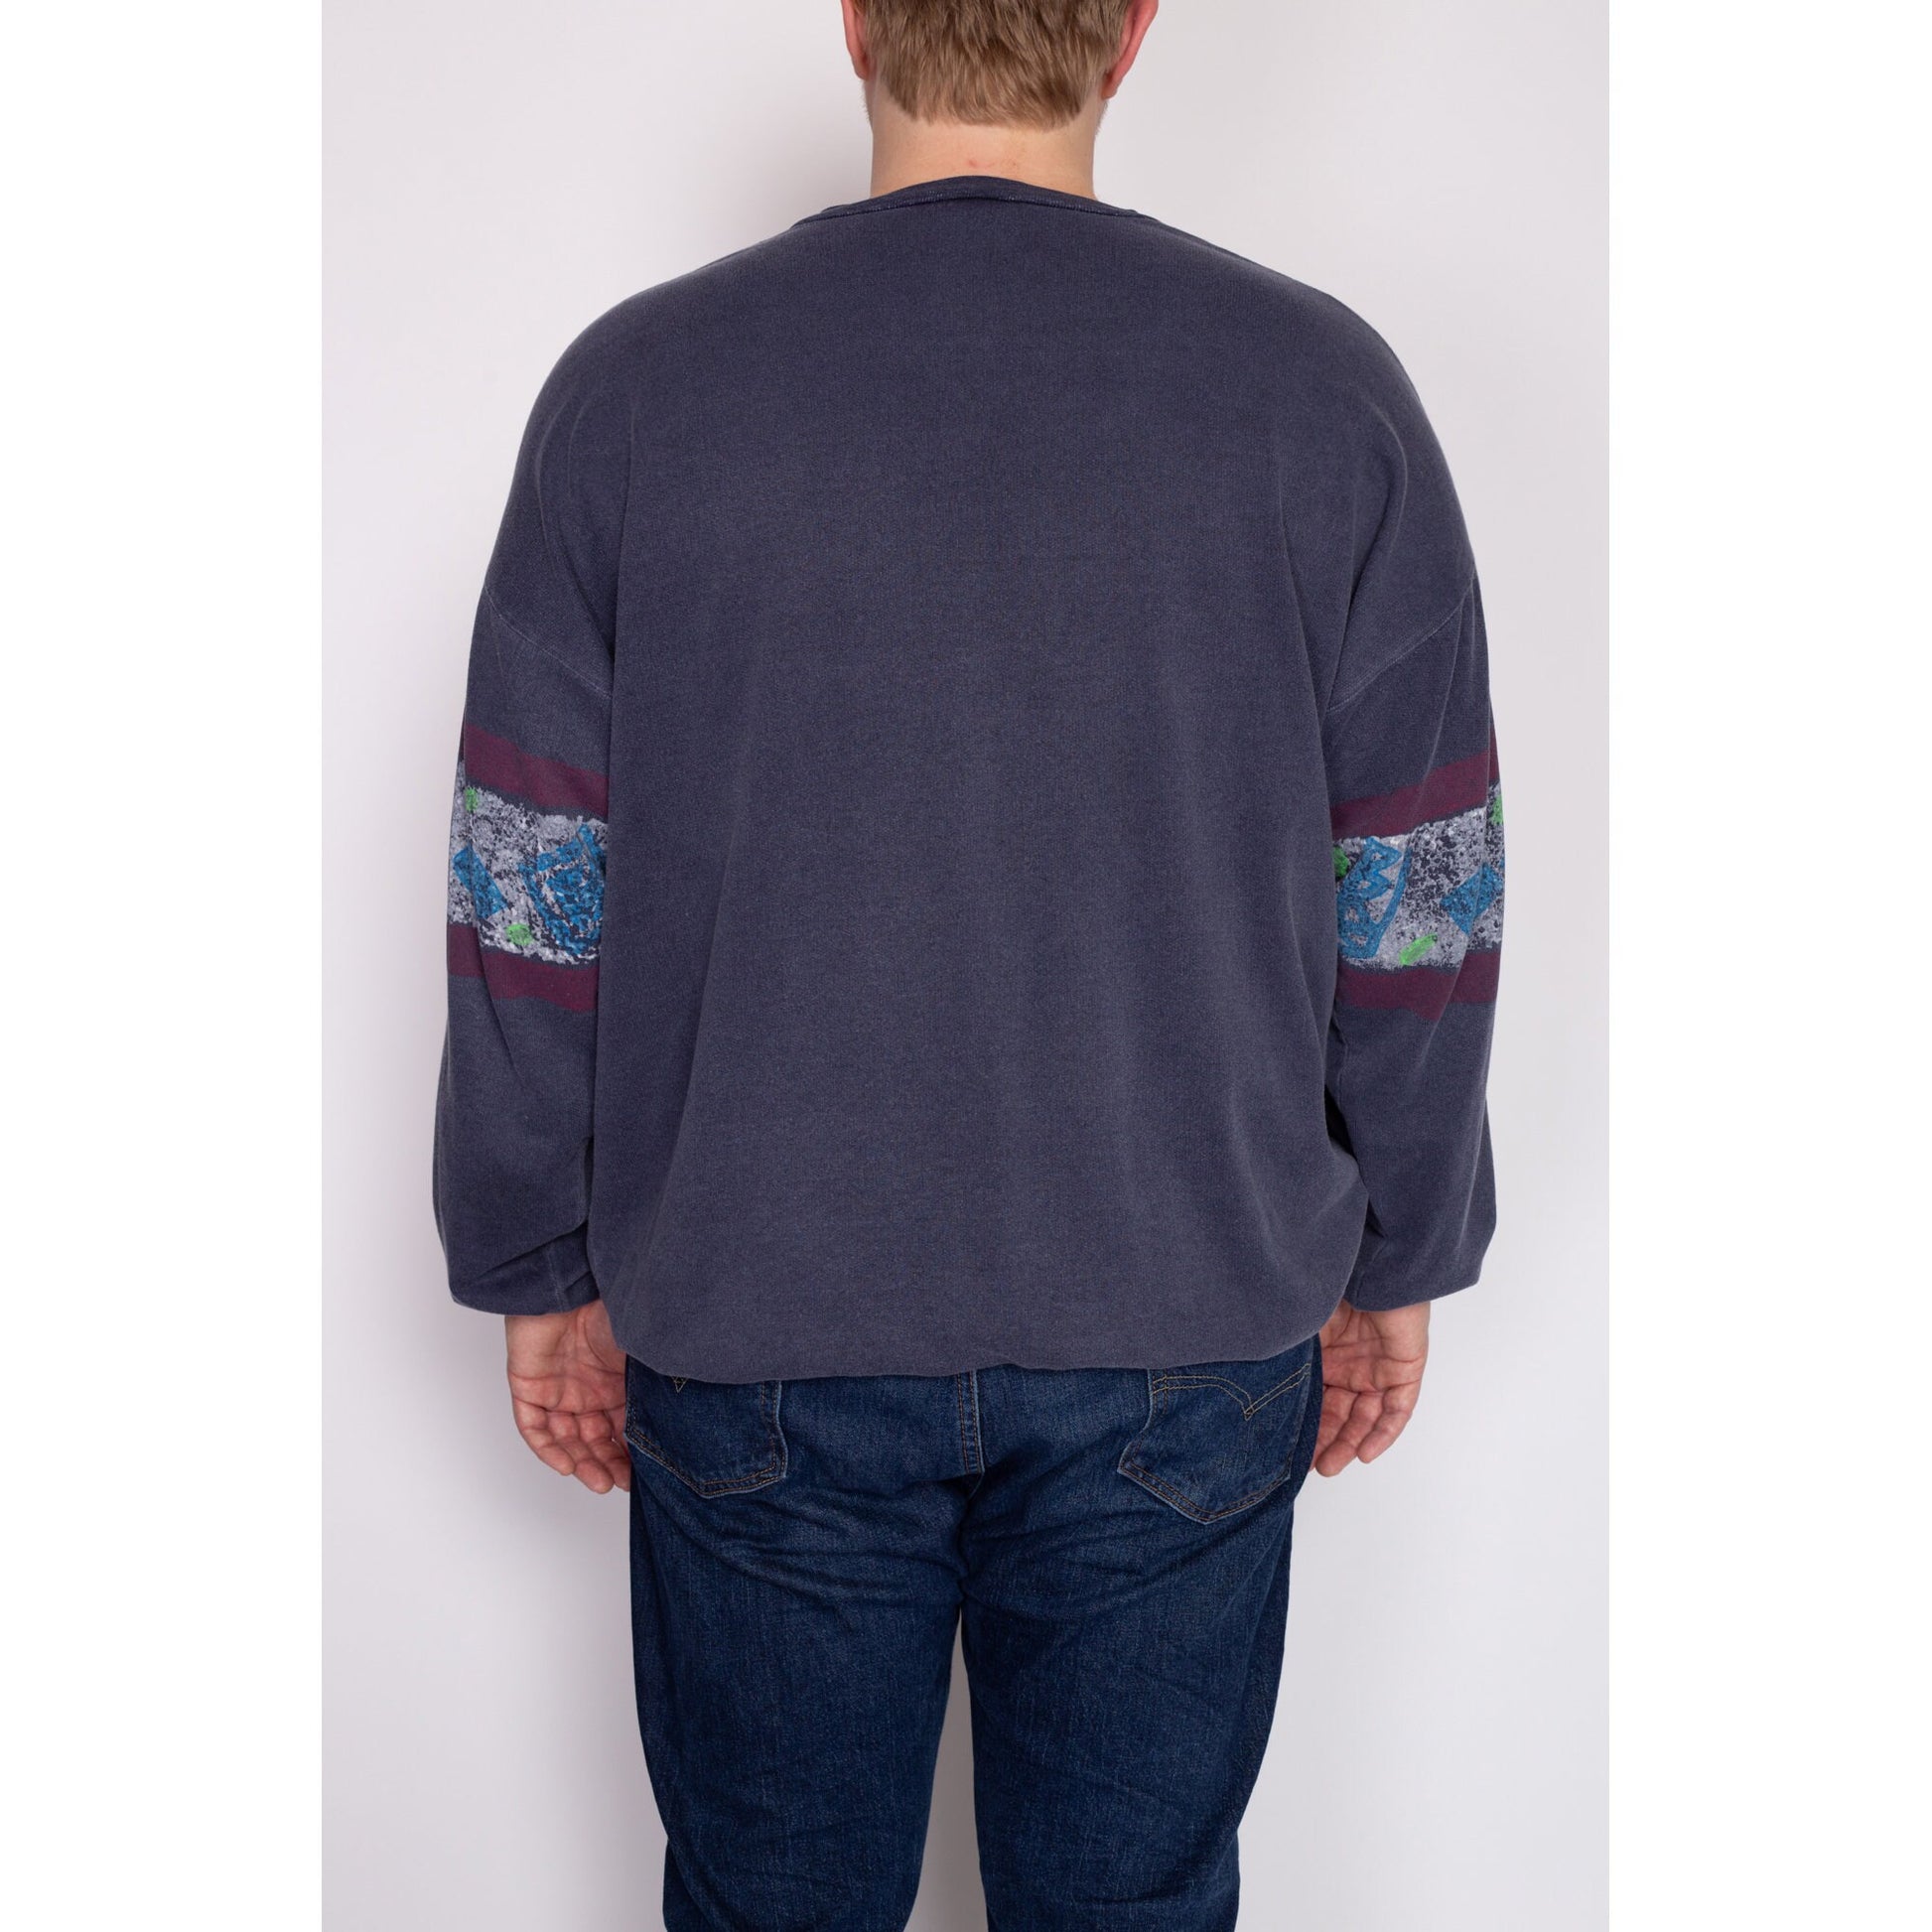 2X 80s Hobie Long Sleeve Surfer Shirt | Vintage Navy Blue Skater Graphic Sweatshirt